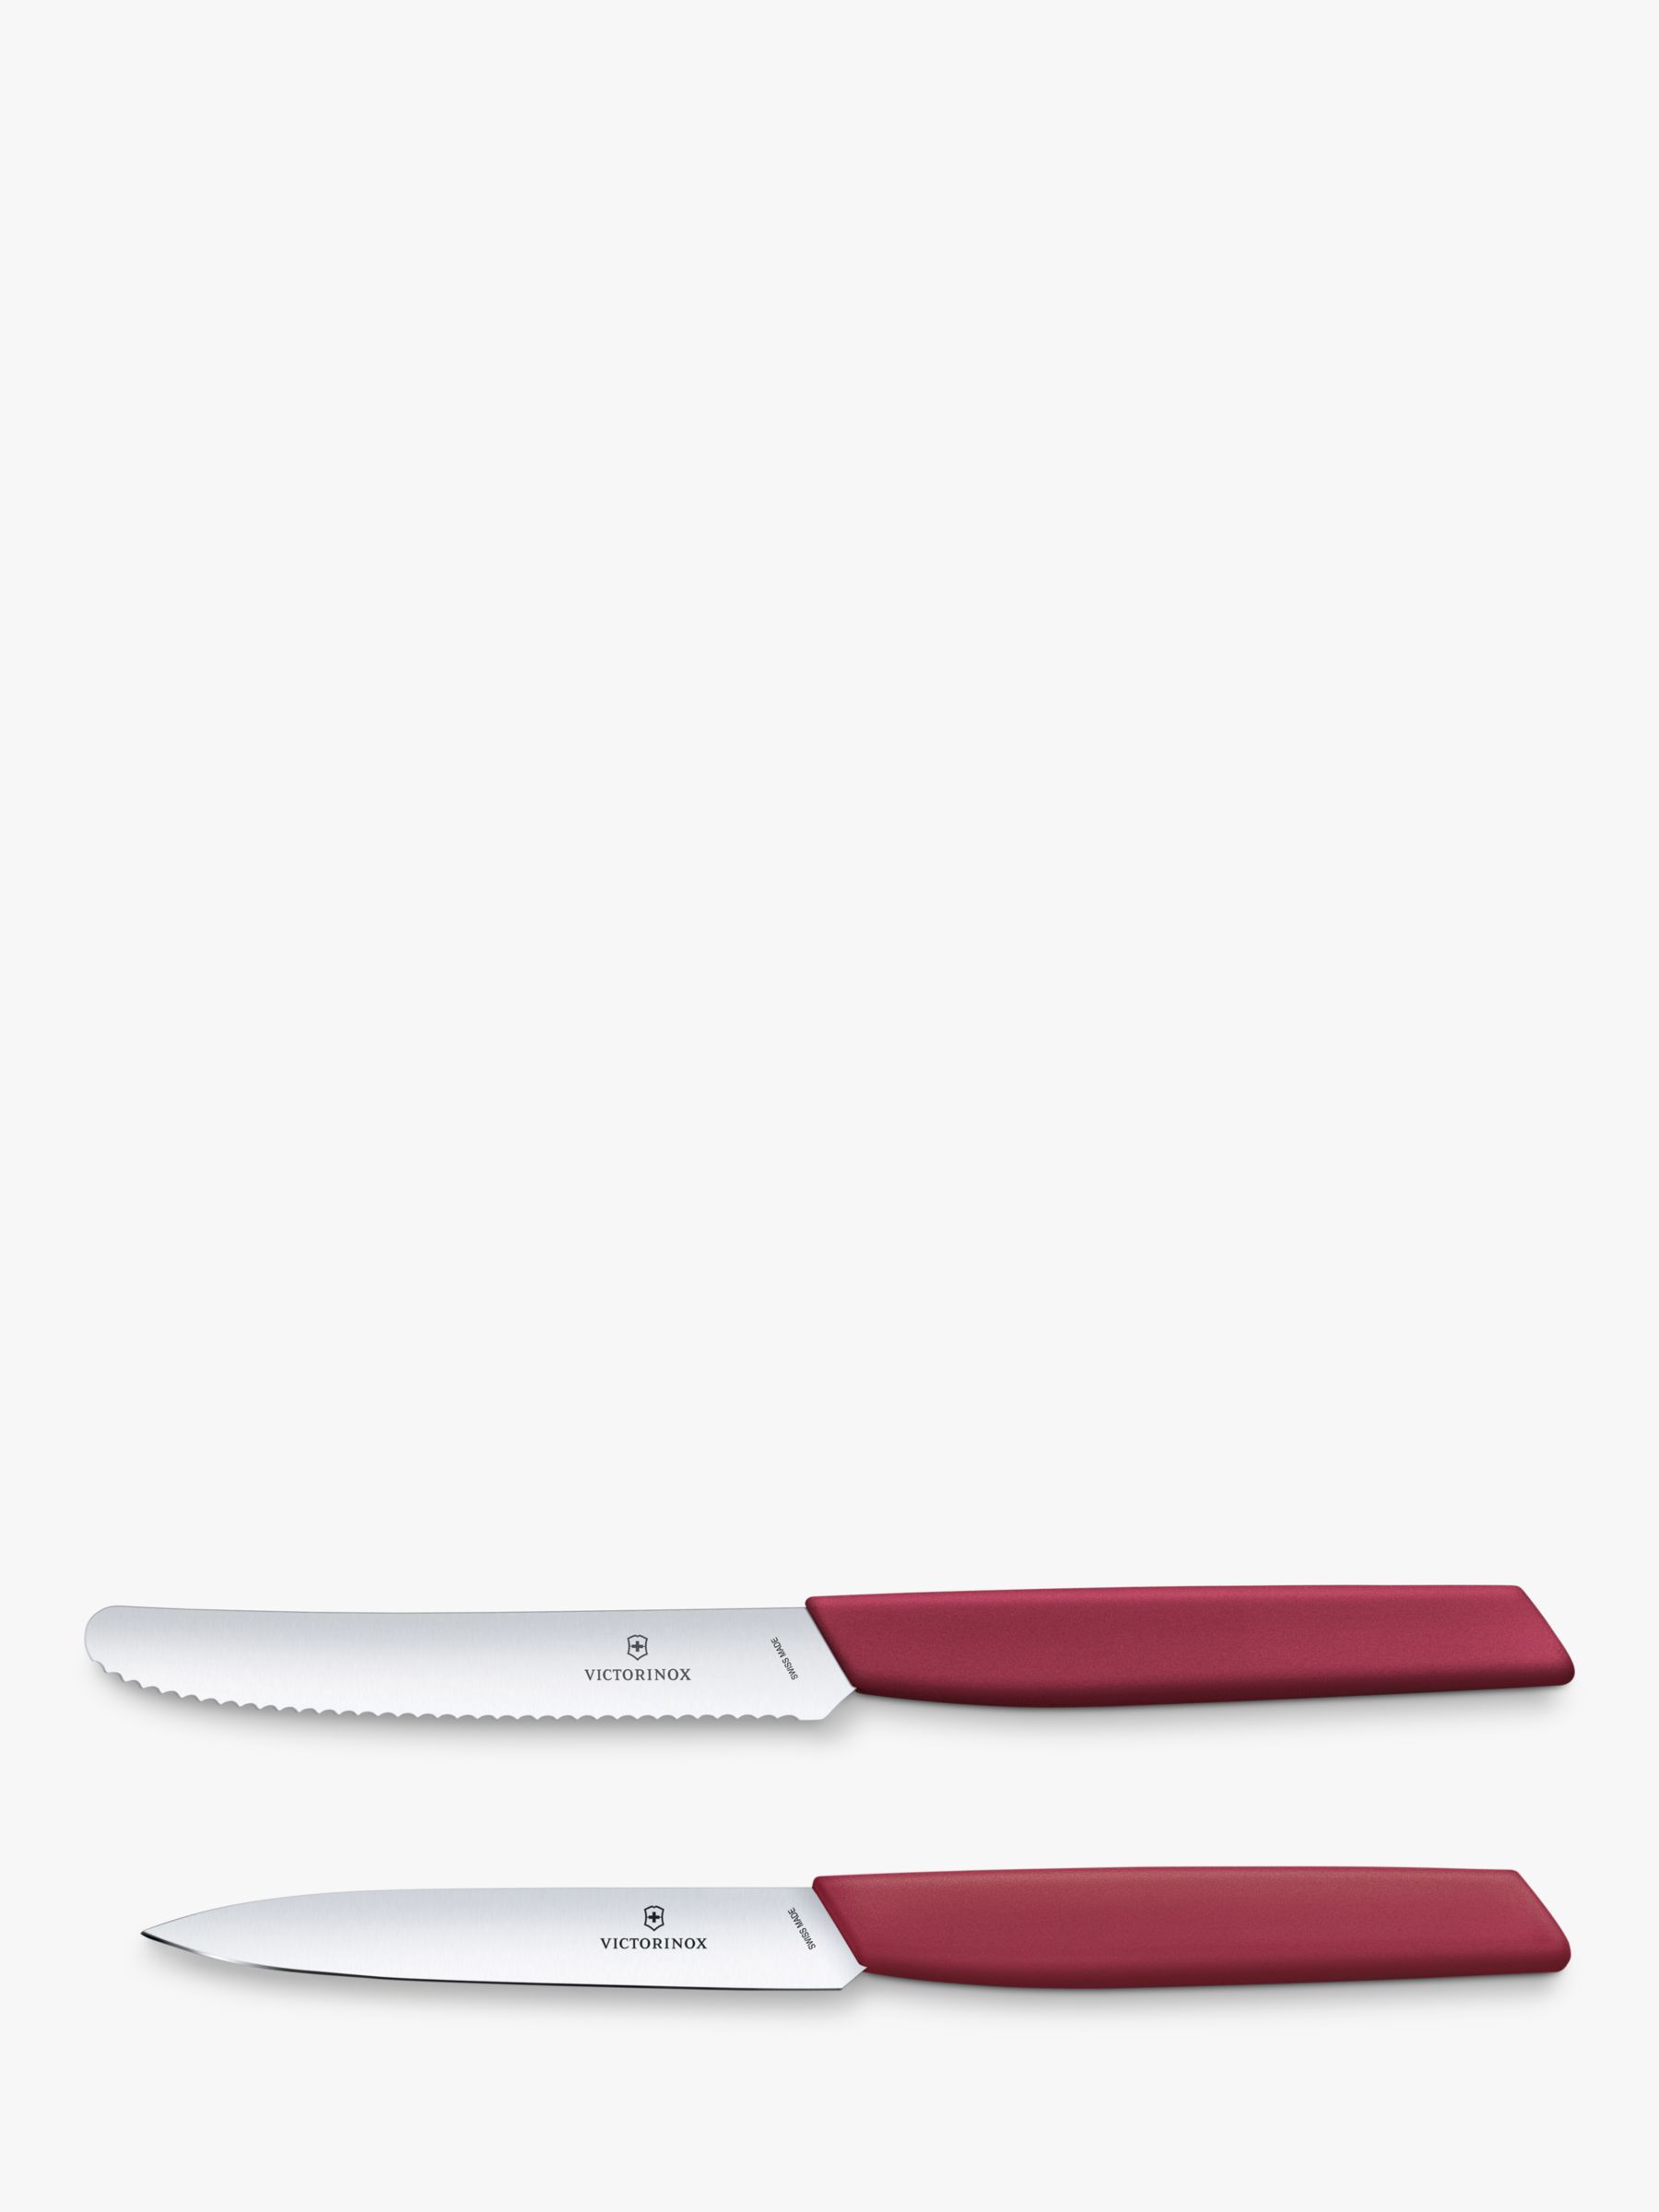 Victorinox Swiss Modern Stainless Steel Paring Knife Set, 2 Piece